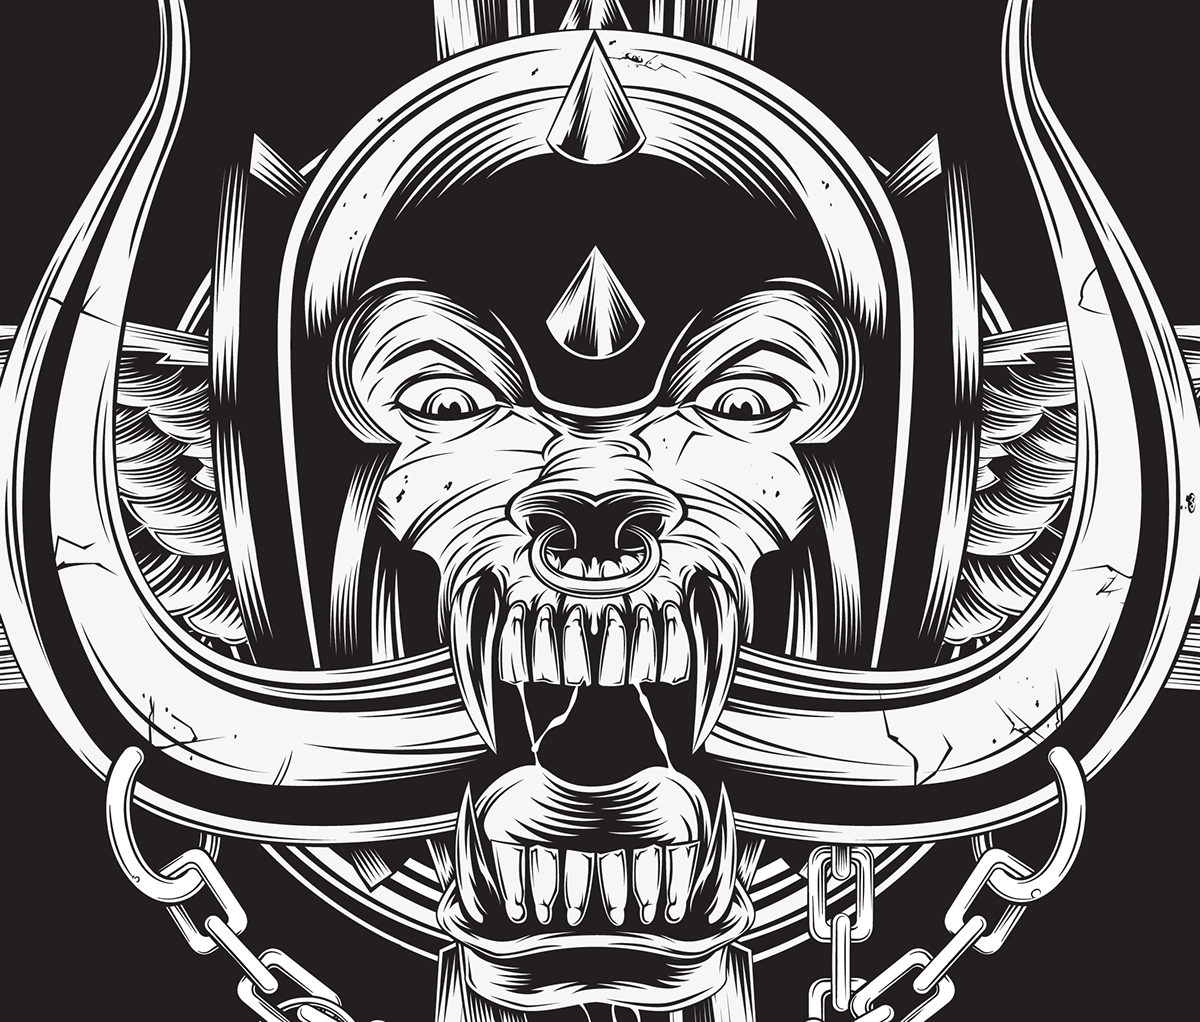 Official Motörhead T-Shirt Design on Pantone Canvas Gallery